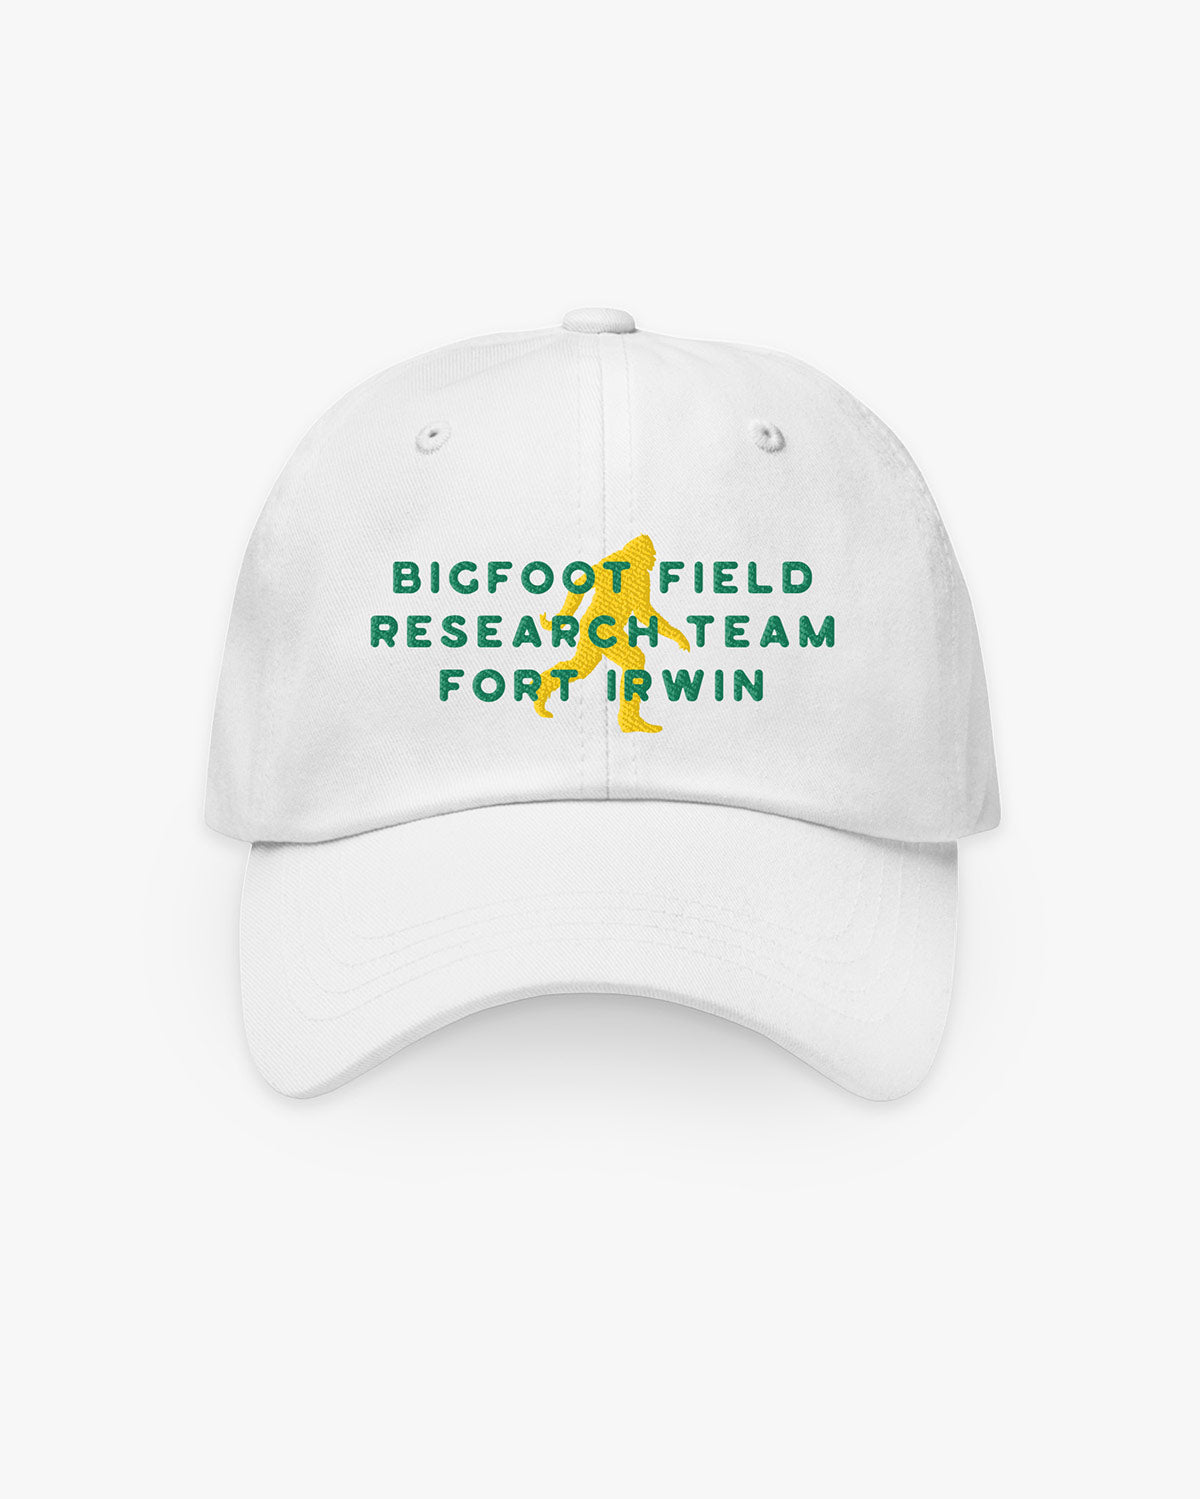 Bigfoot Research Team - Fort Irwin - Hat